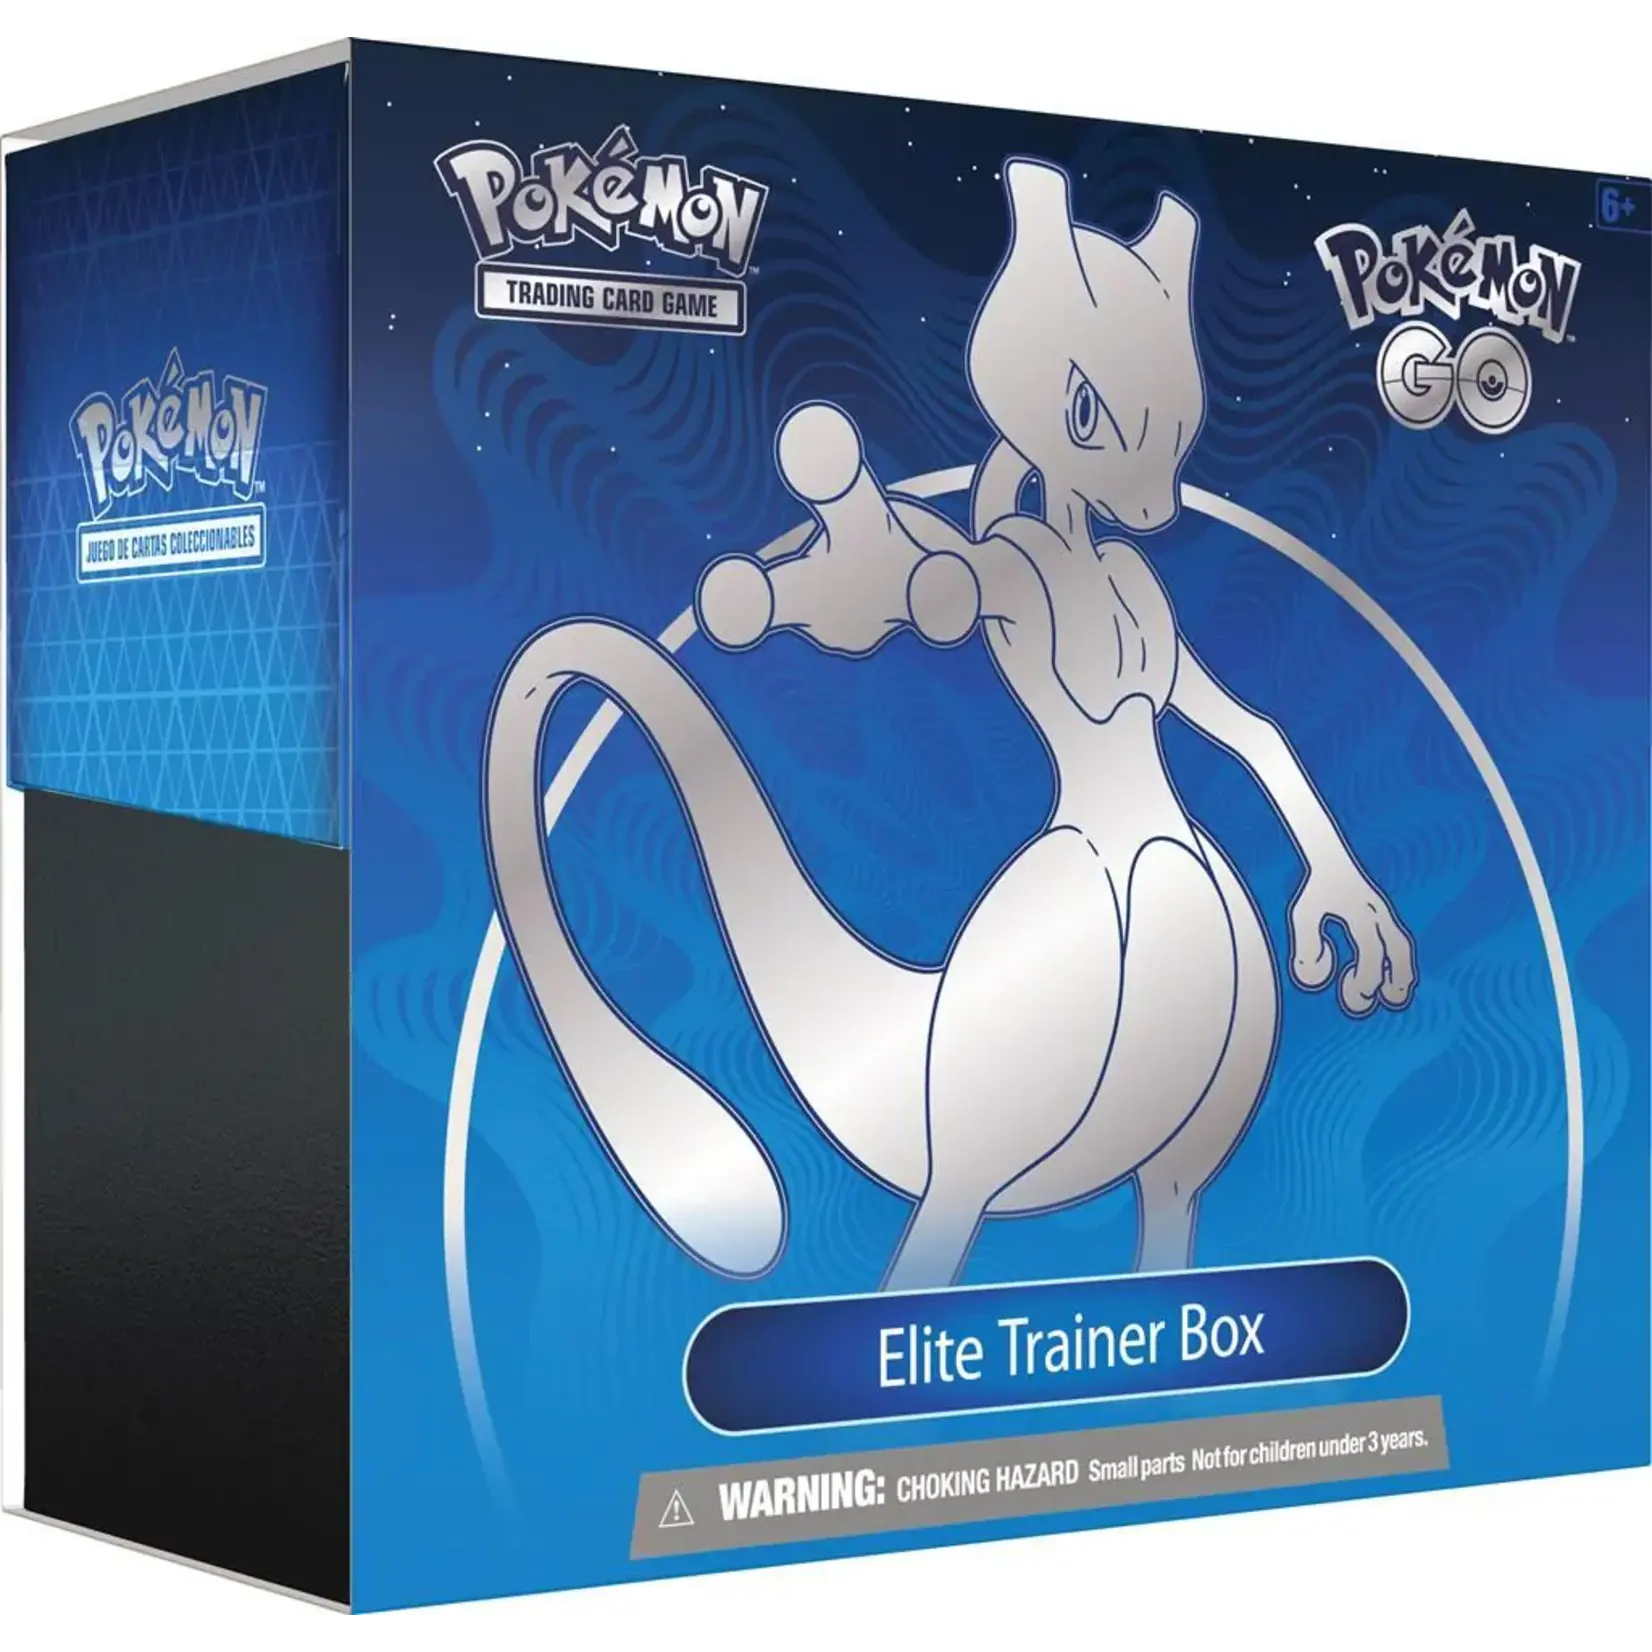 Pokémon Pokemon go elite trainer box